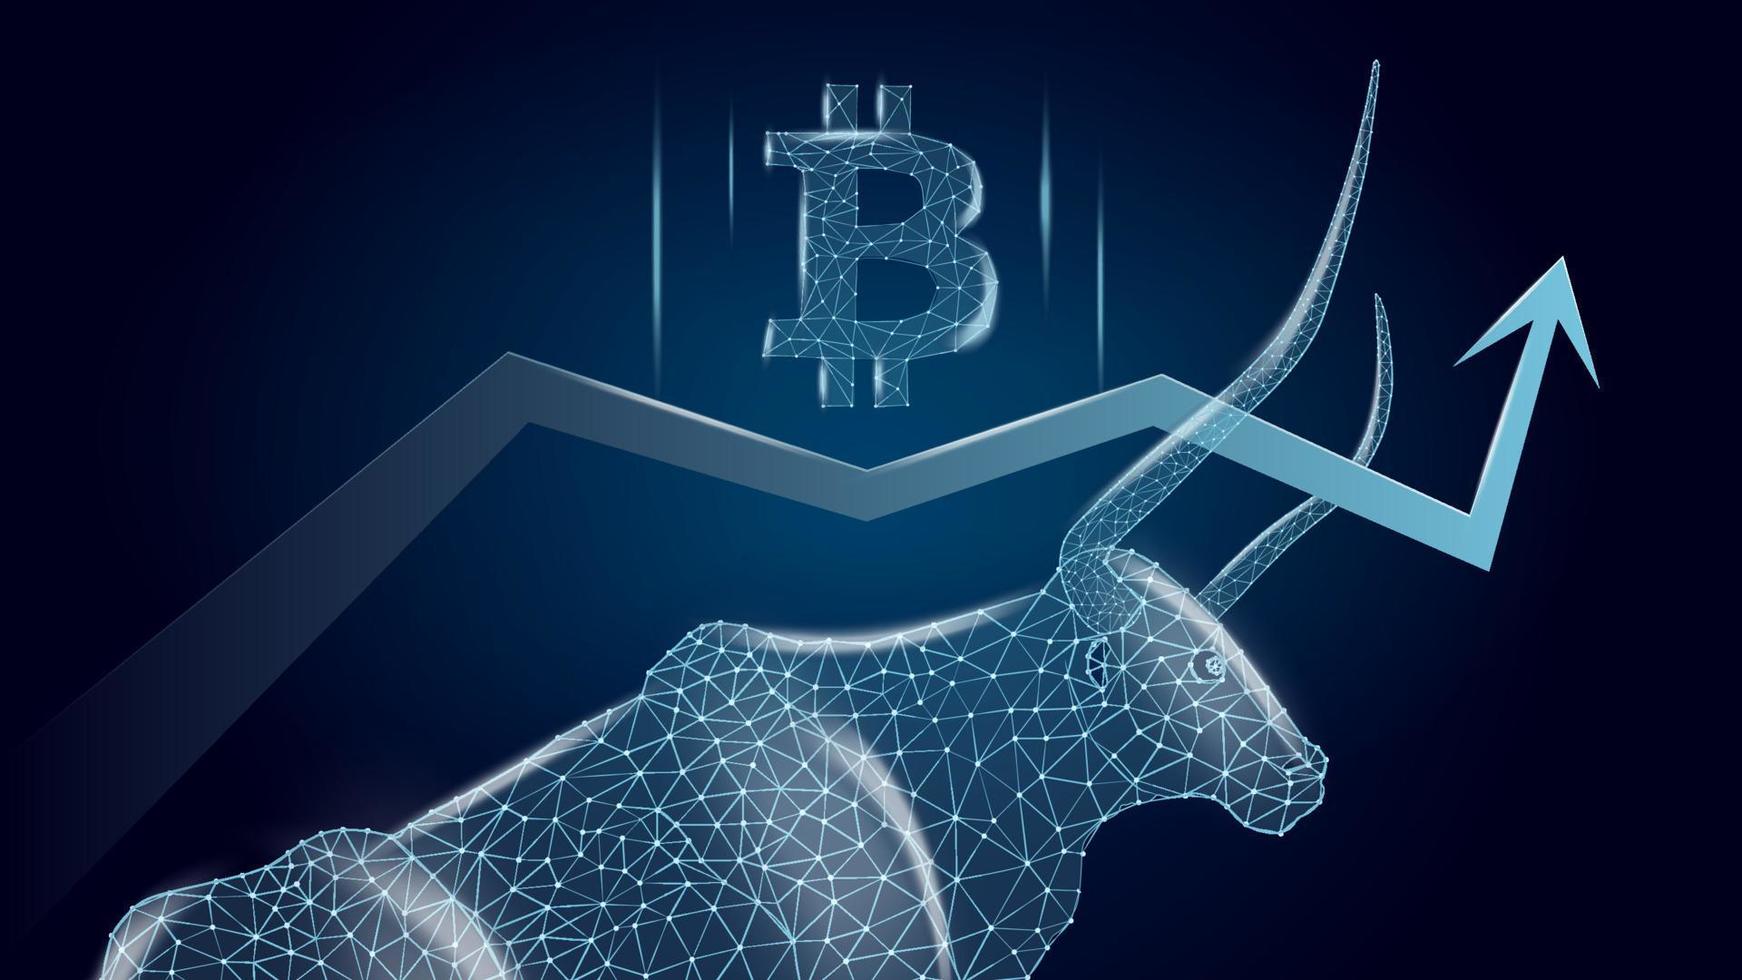 Bullish trend of Bitcoin with a polygonal bull and an upward arrow with BTC symbol on dark blue background. Modern neon vector illustration.